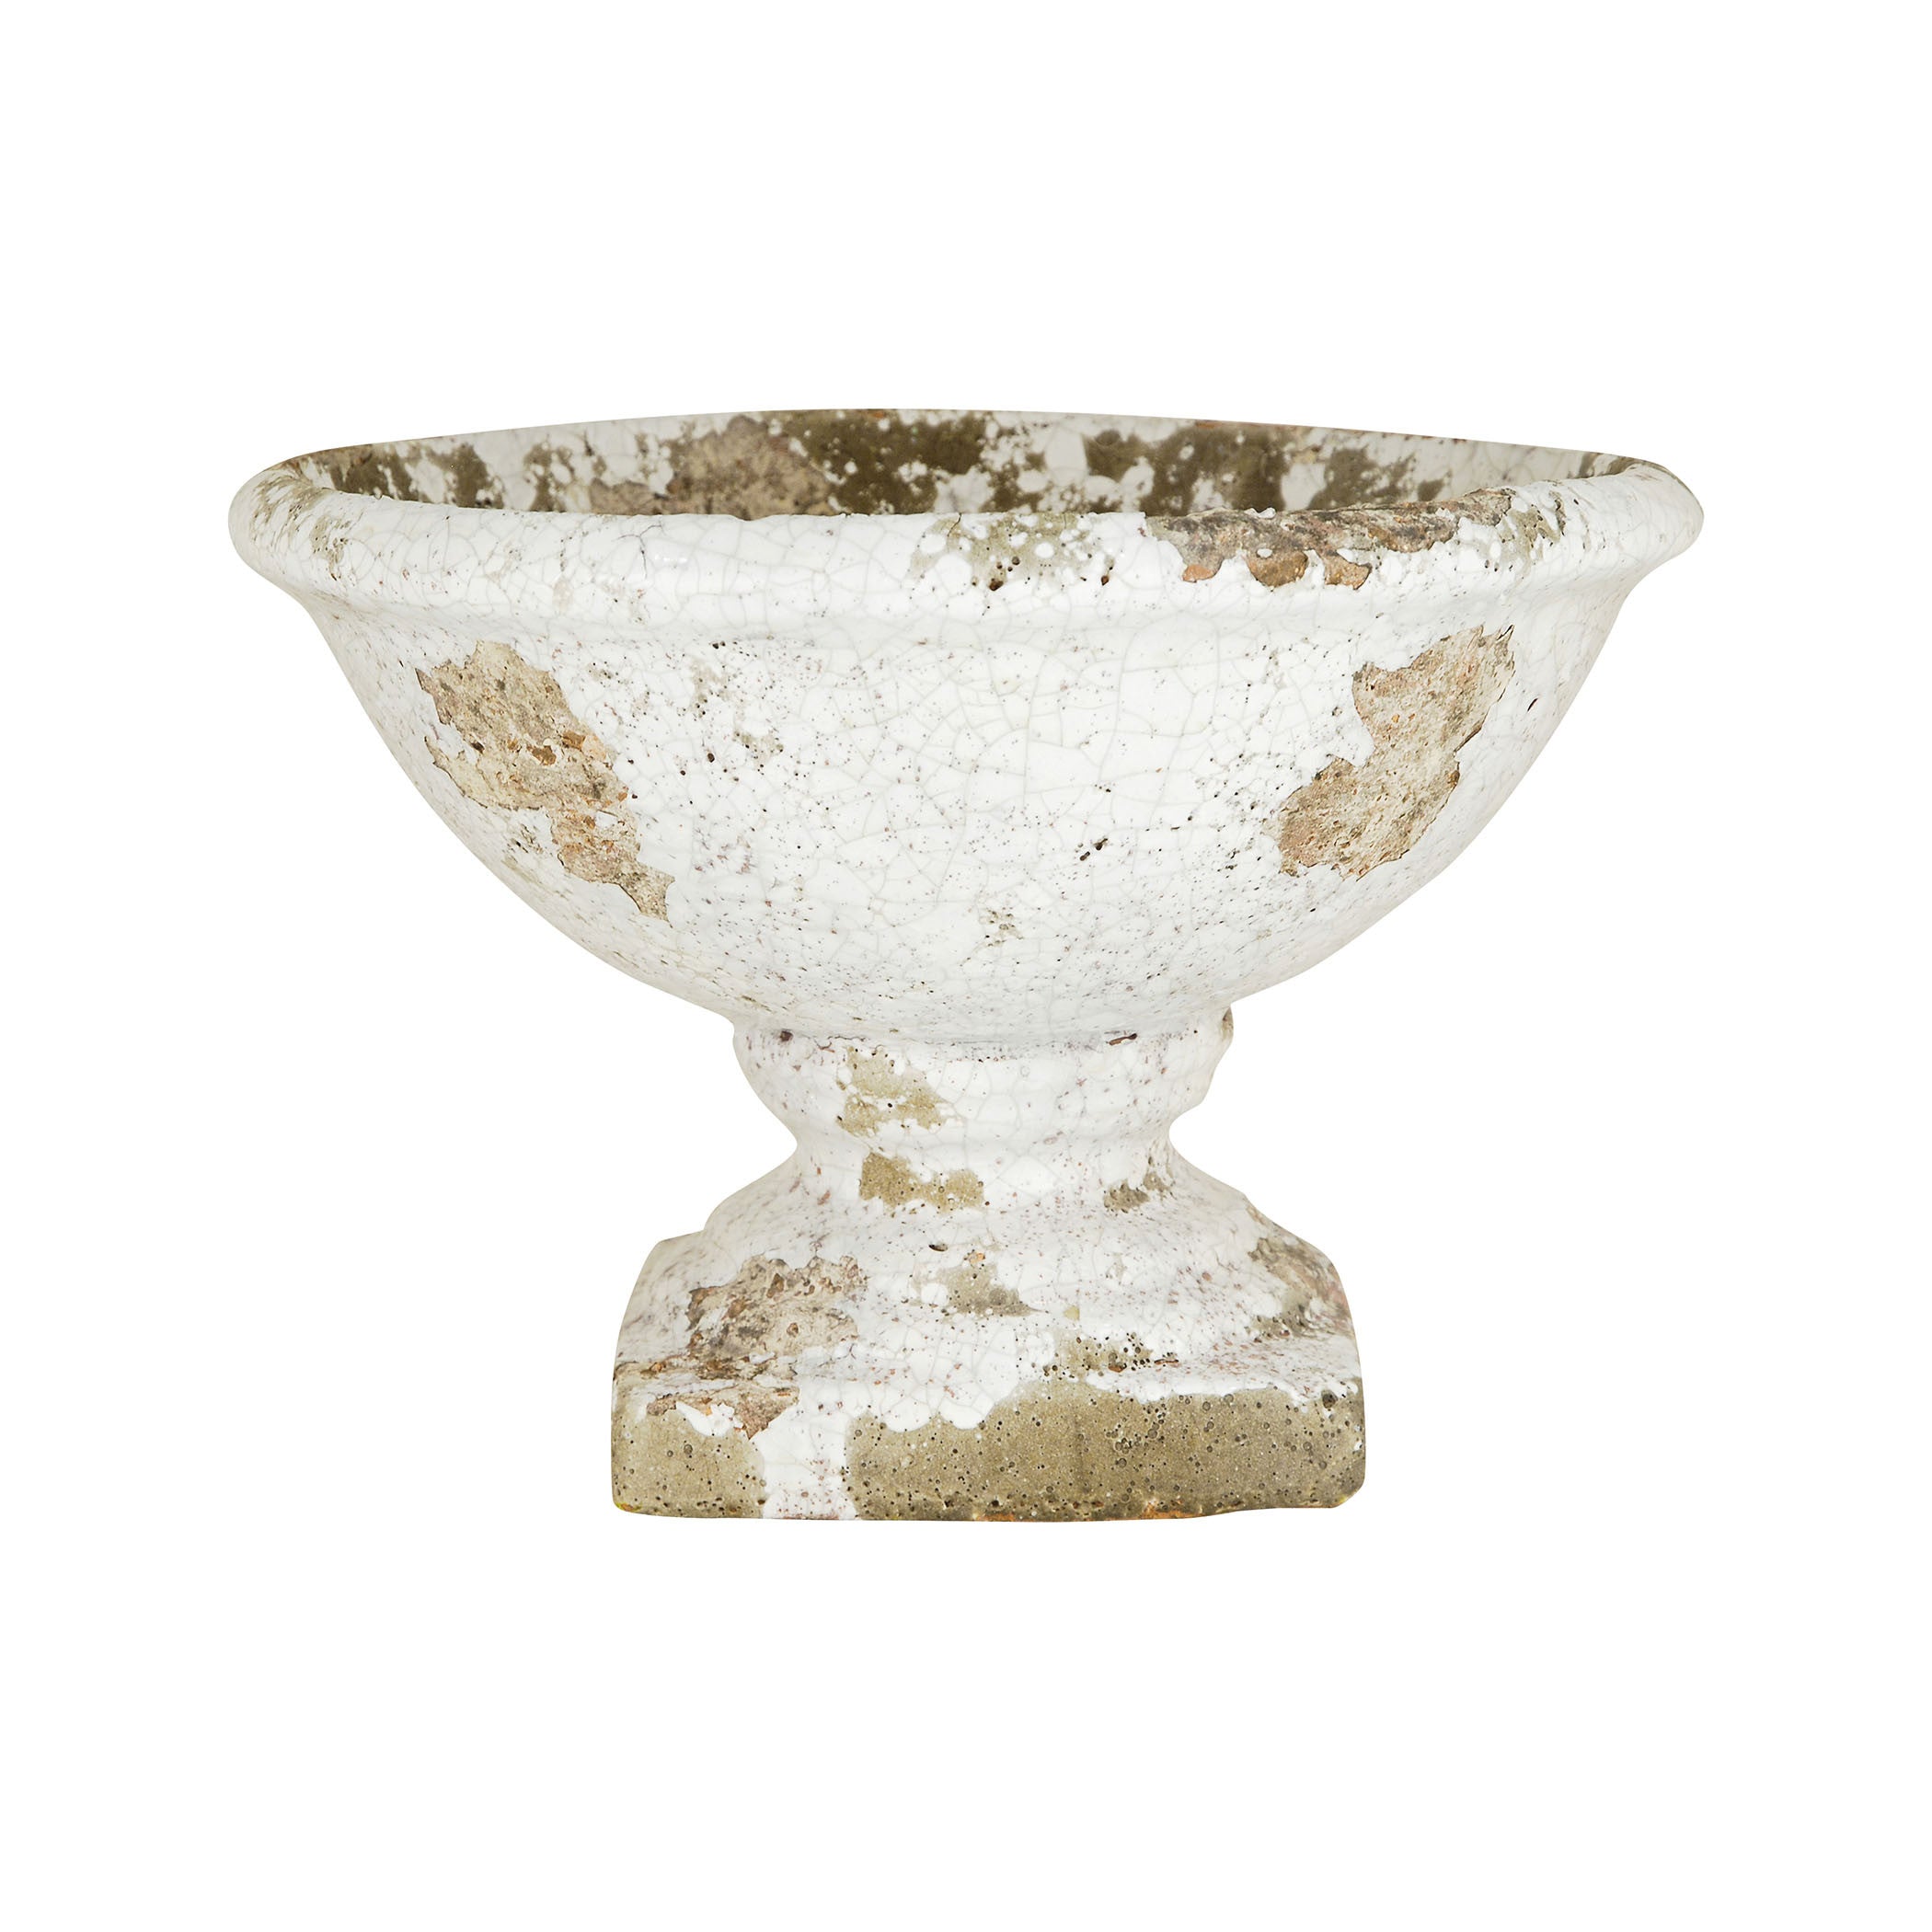 Pomeroy Pom-563027 Castleton Collection Antique White Crackle Finish Bowl